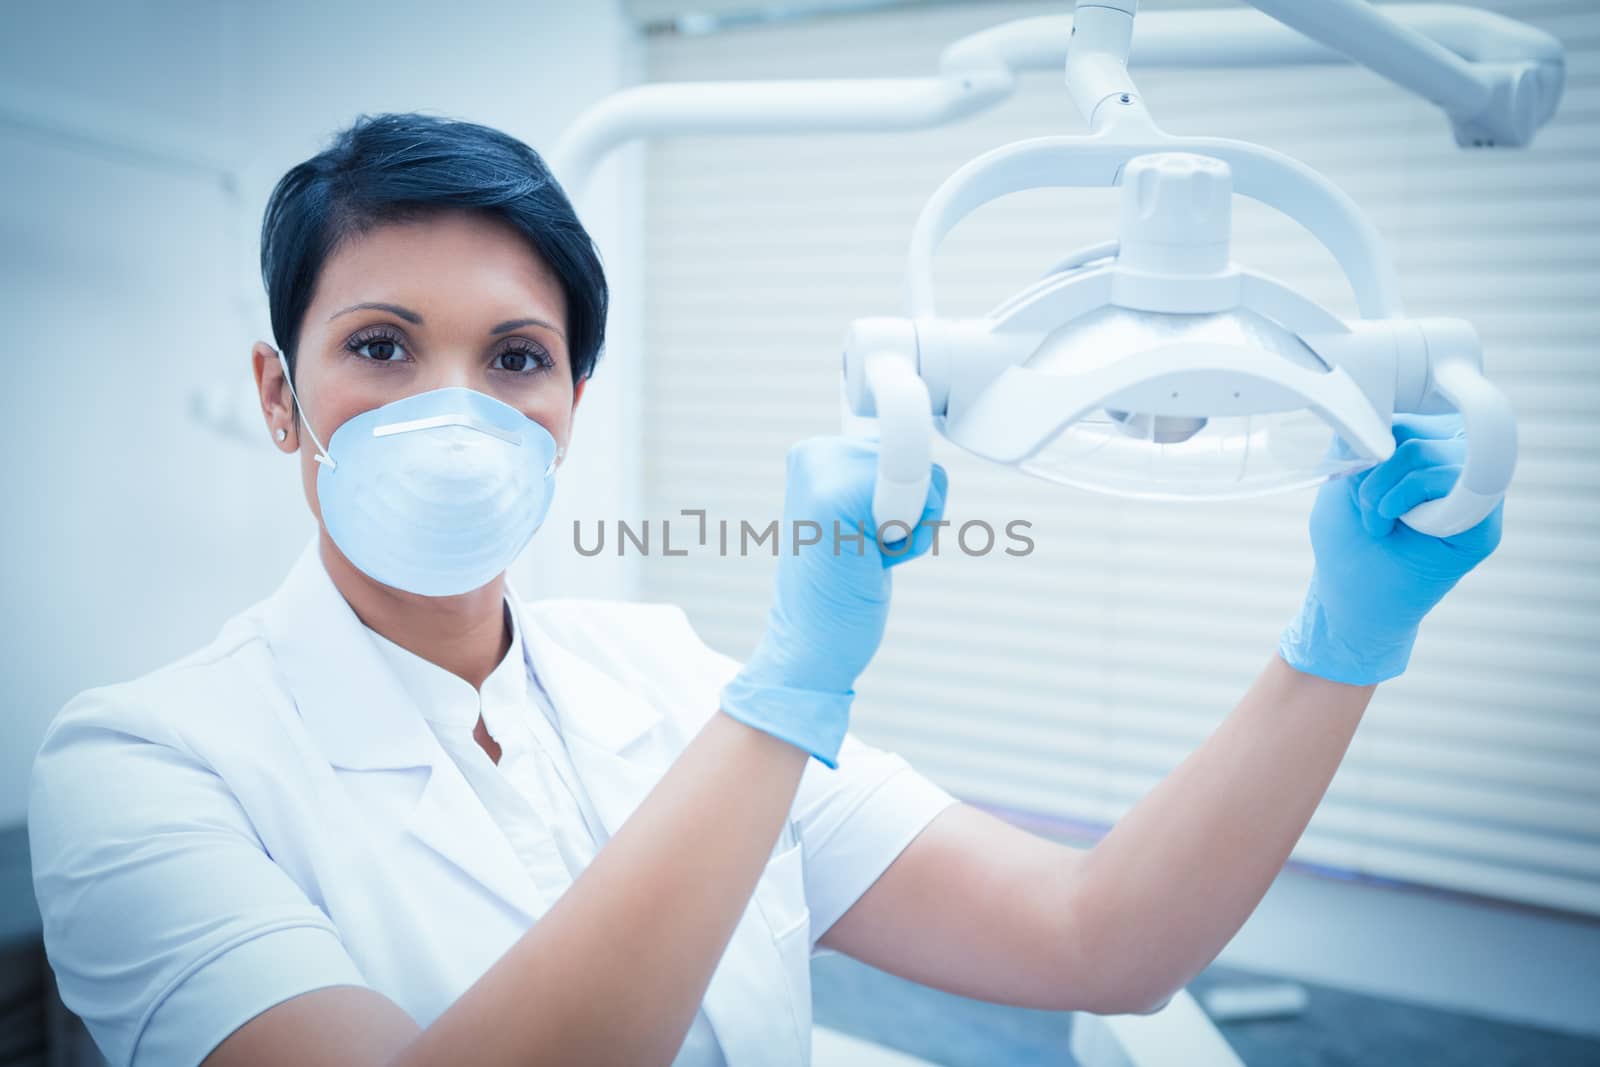 Demale dentist in surgical mask adjusting light by Wavebreakmedia